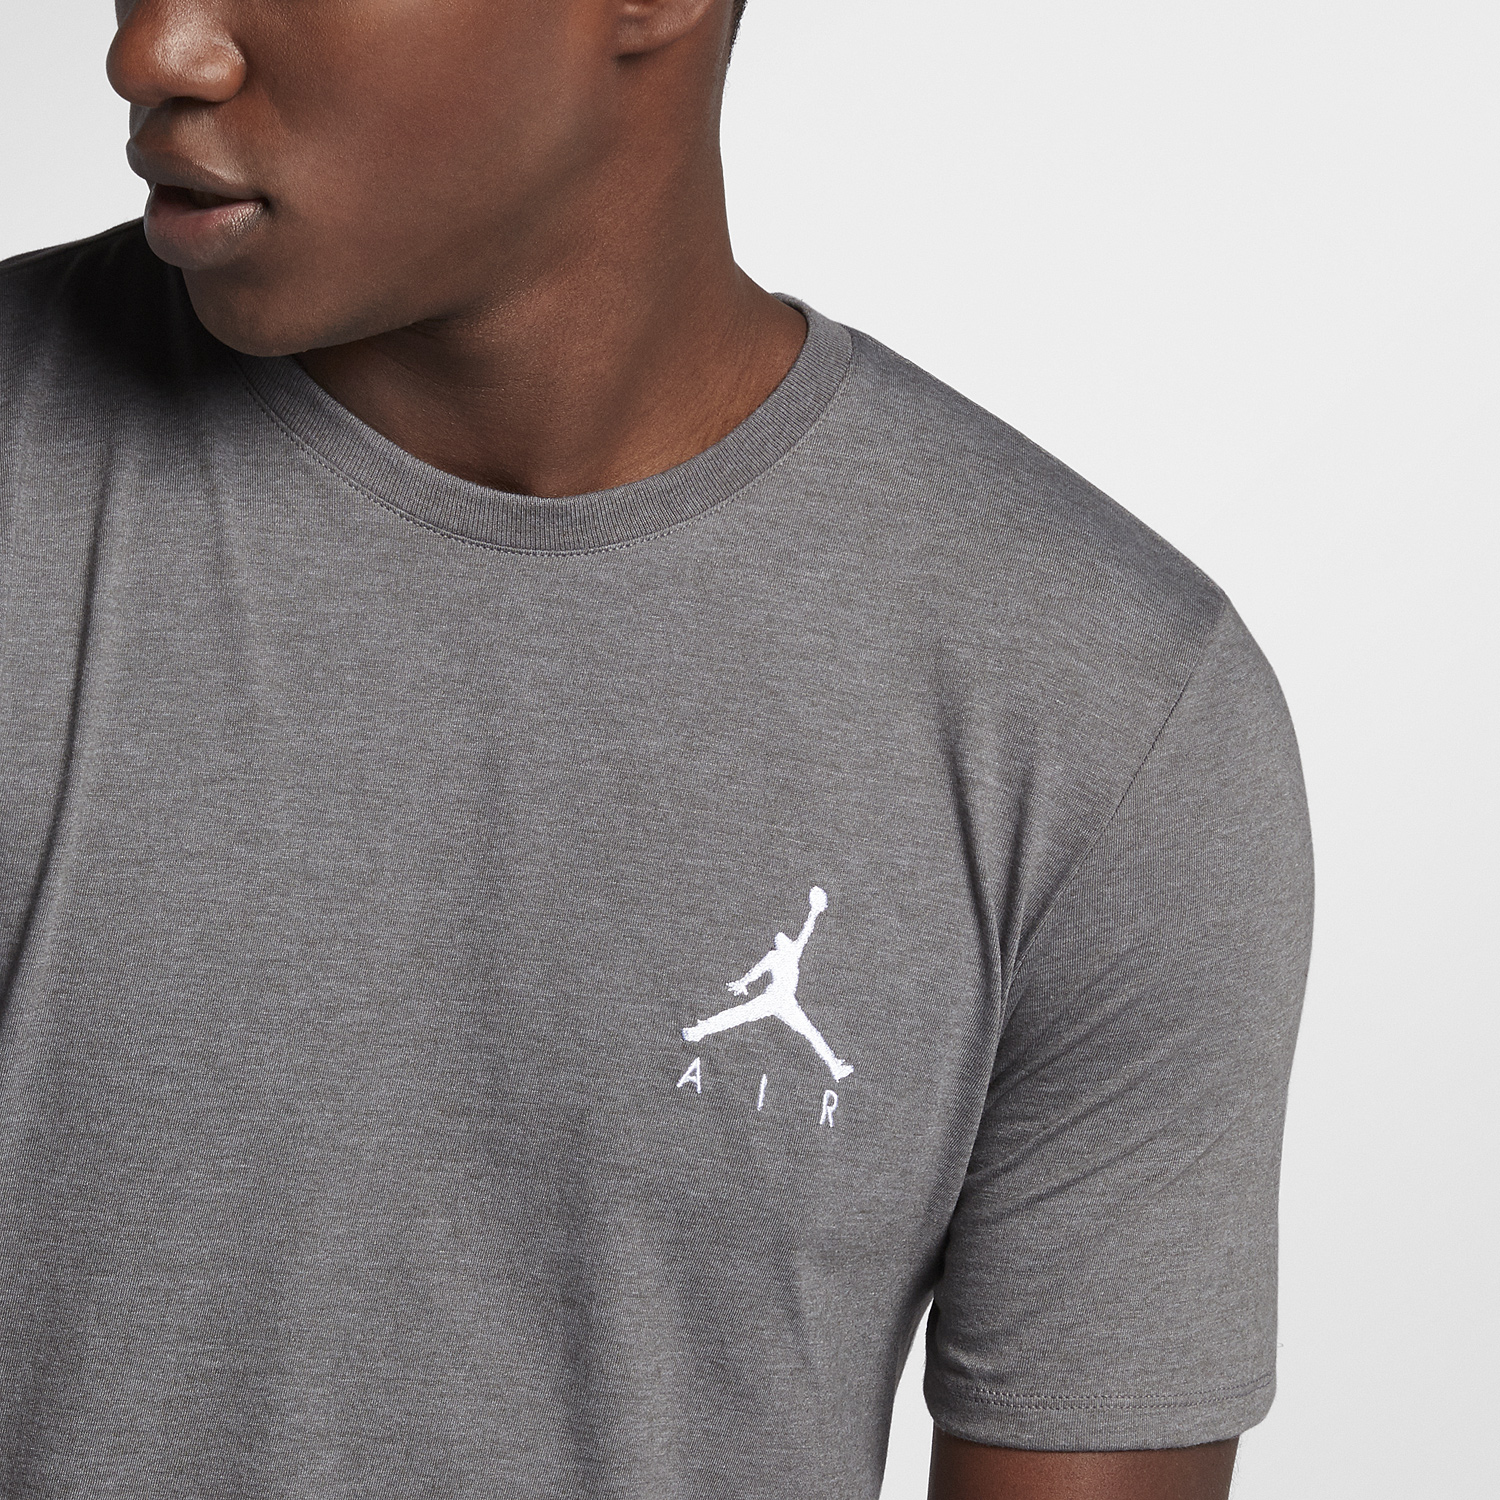 jordan-11-cool-grey-t-shirt